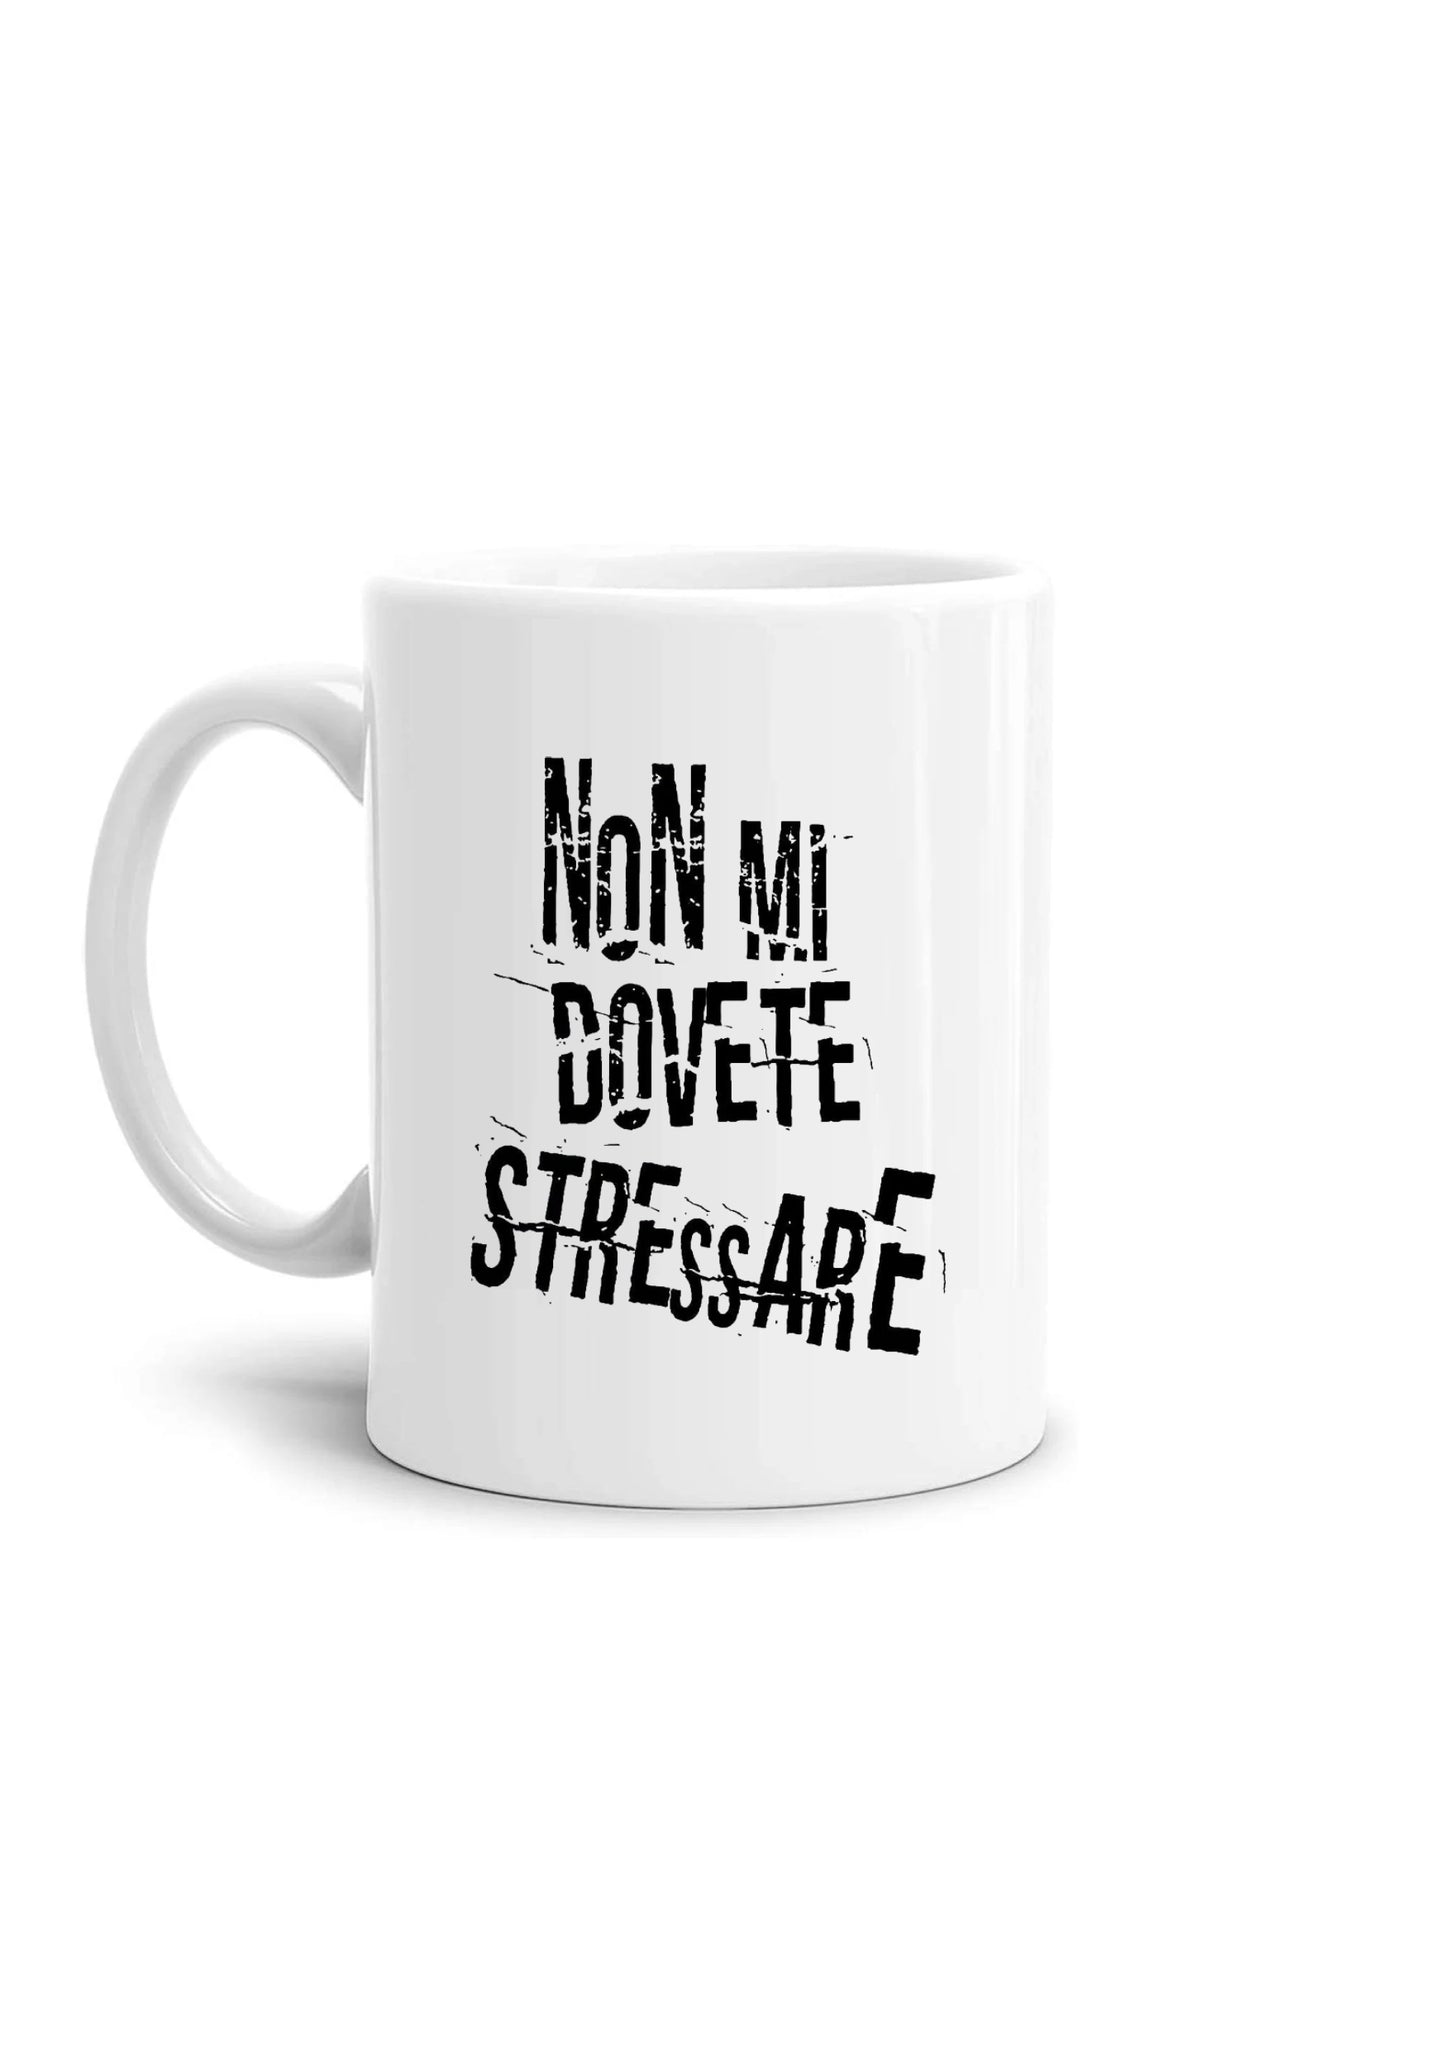 mug Mug-you don't have to stress me